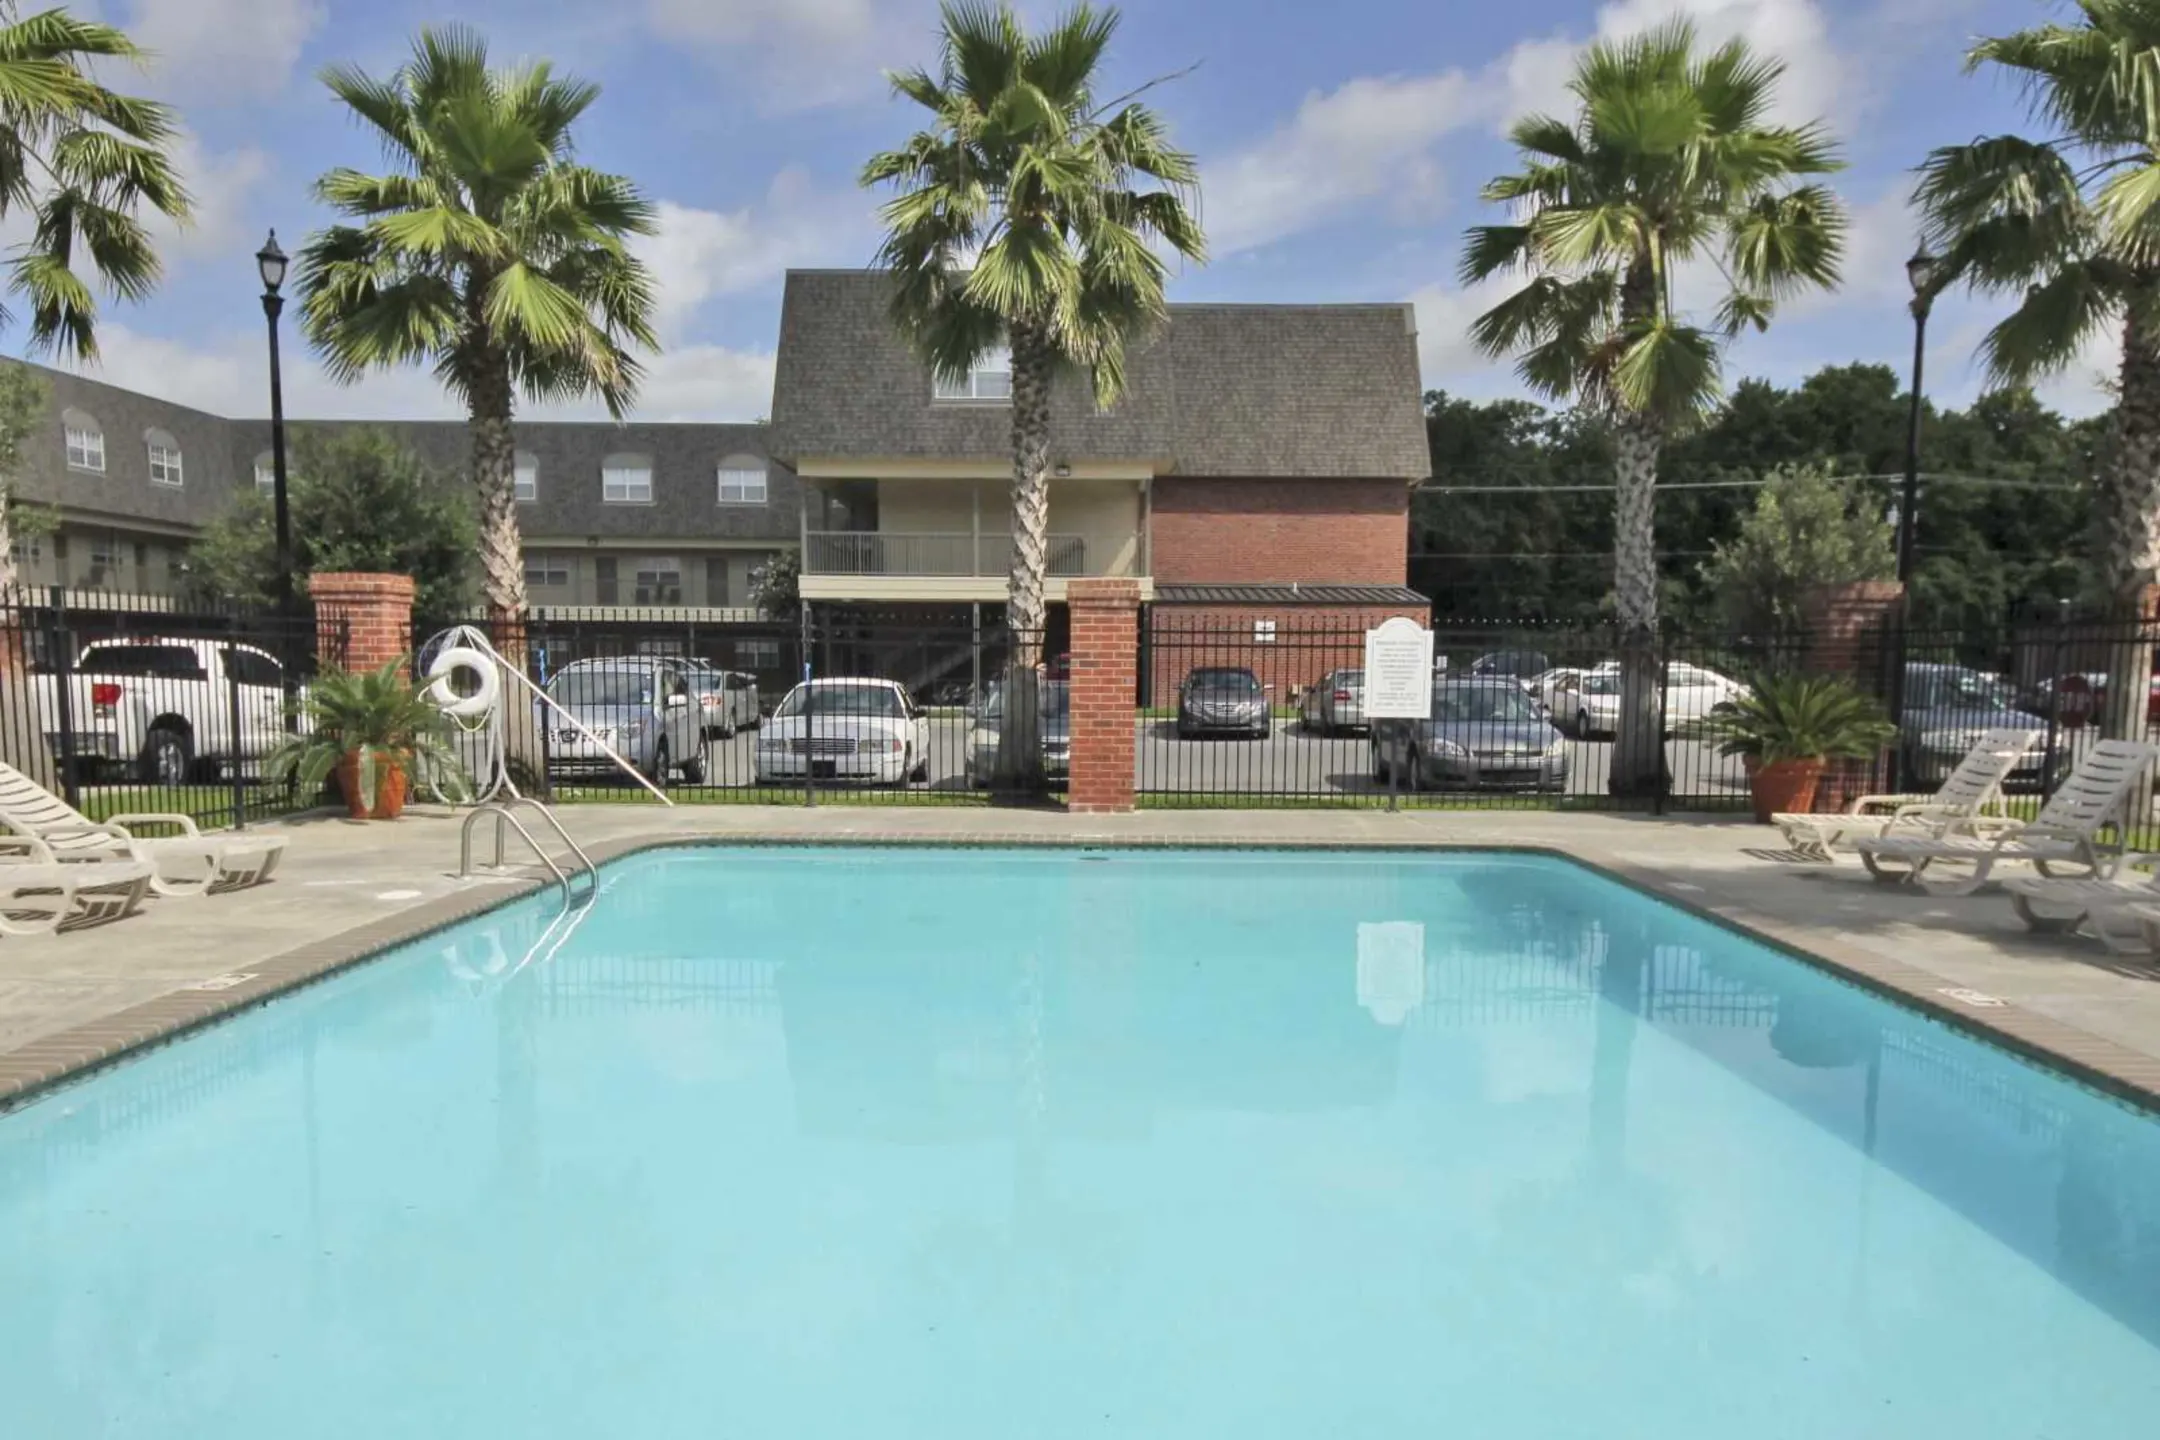 Pool - Bridgeway Apartments and Townhomes - Lafayette, LA